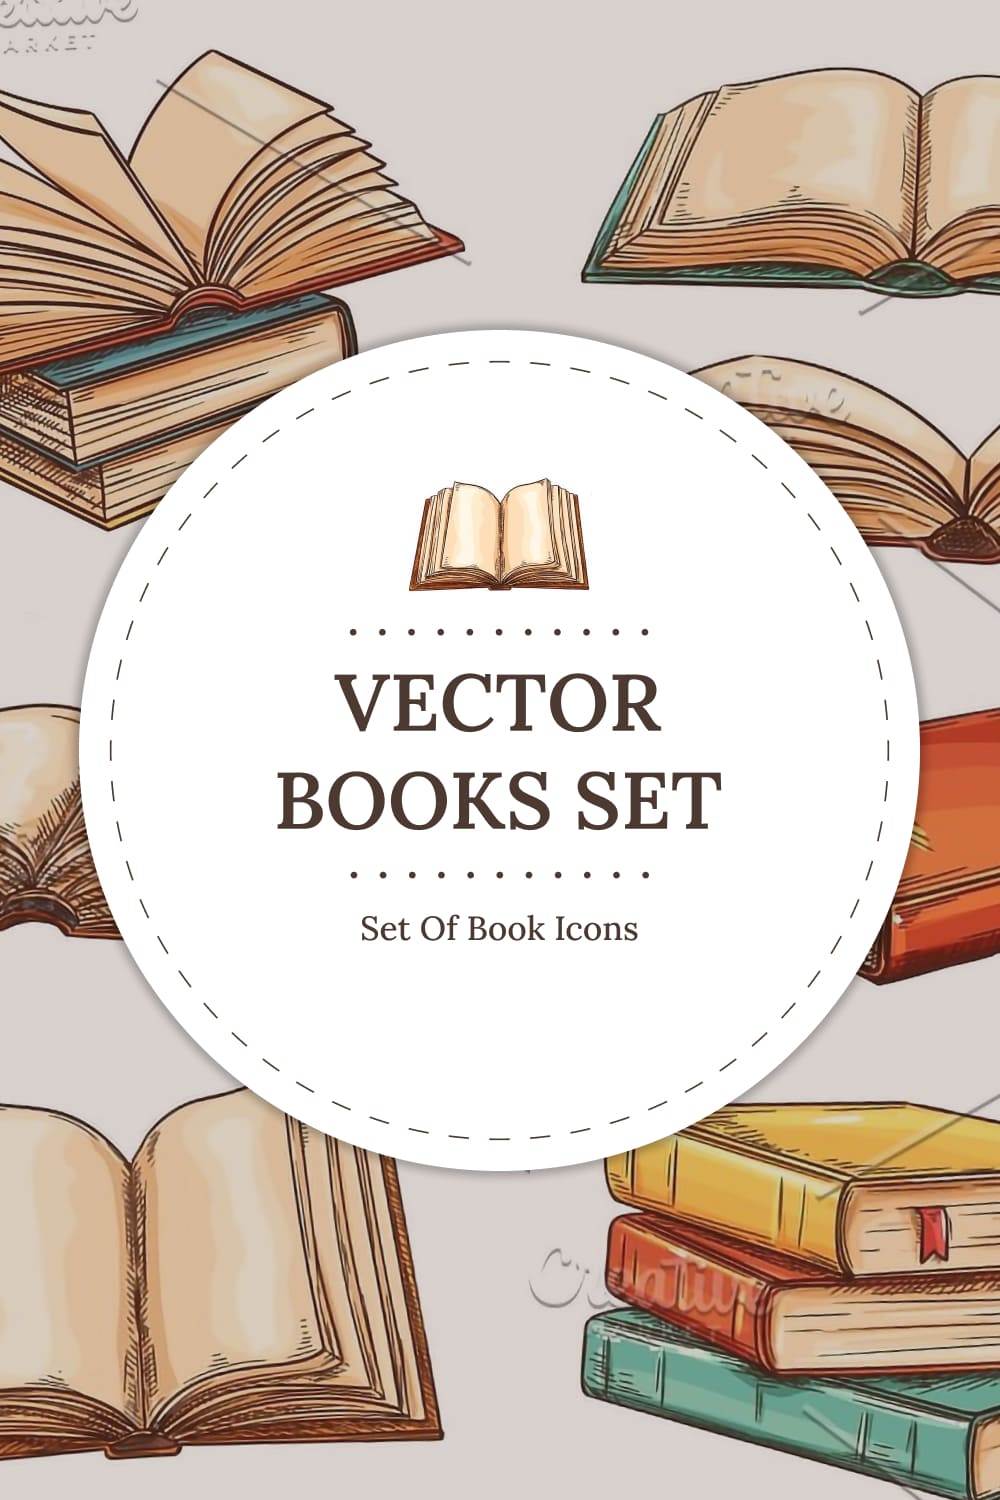 Vector books set pinterest image.